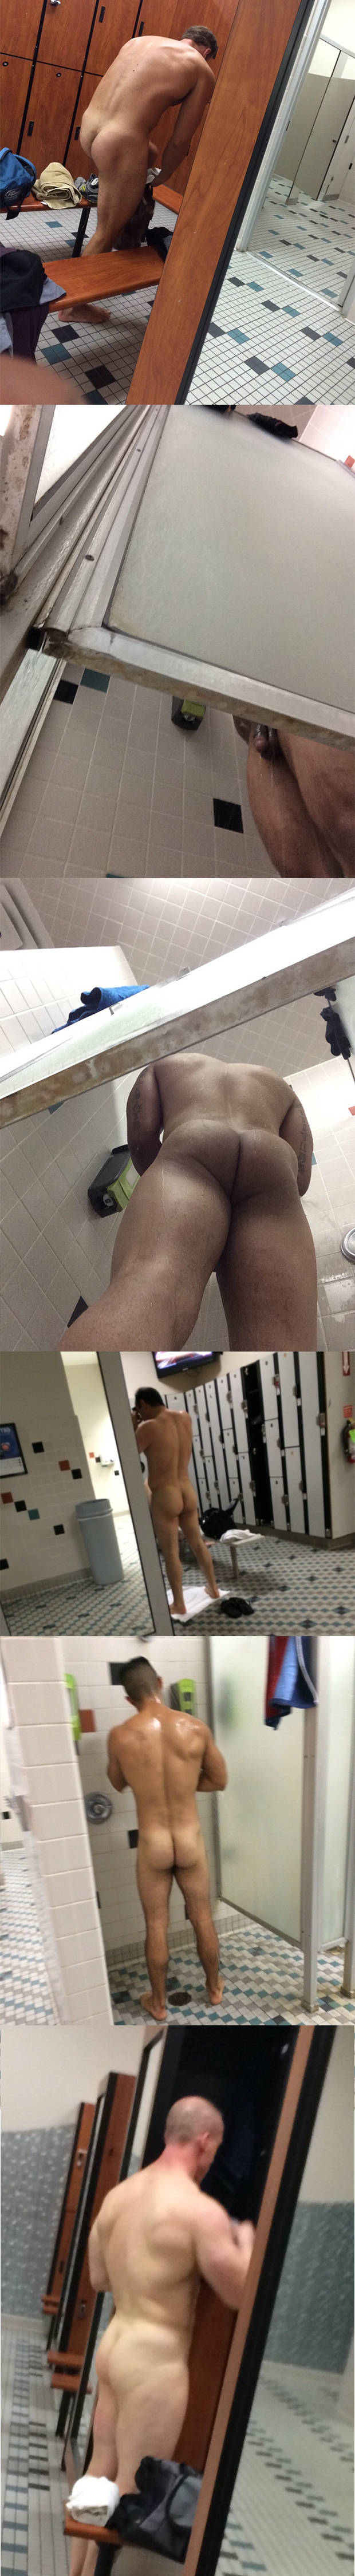 spycam naked guys lockerroom shower